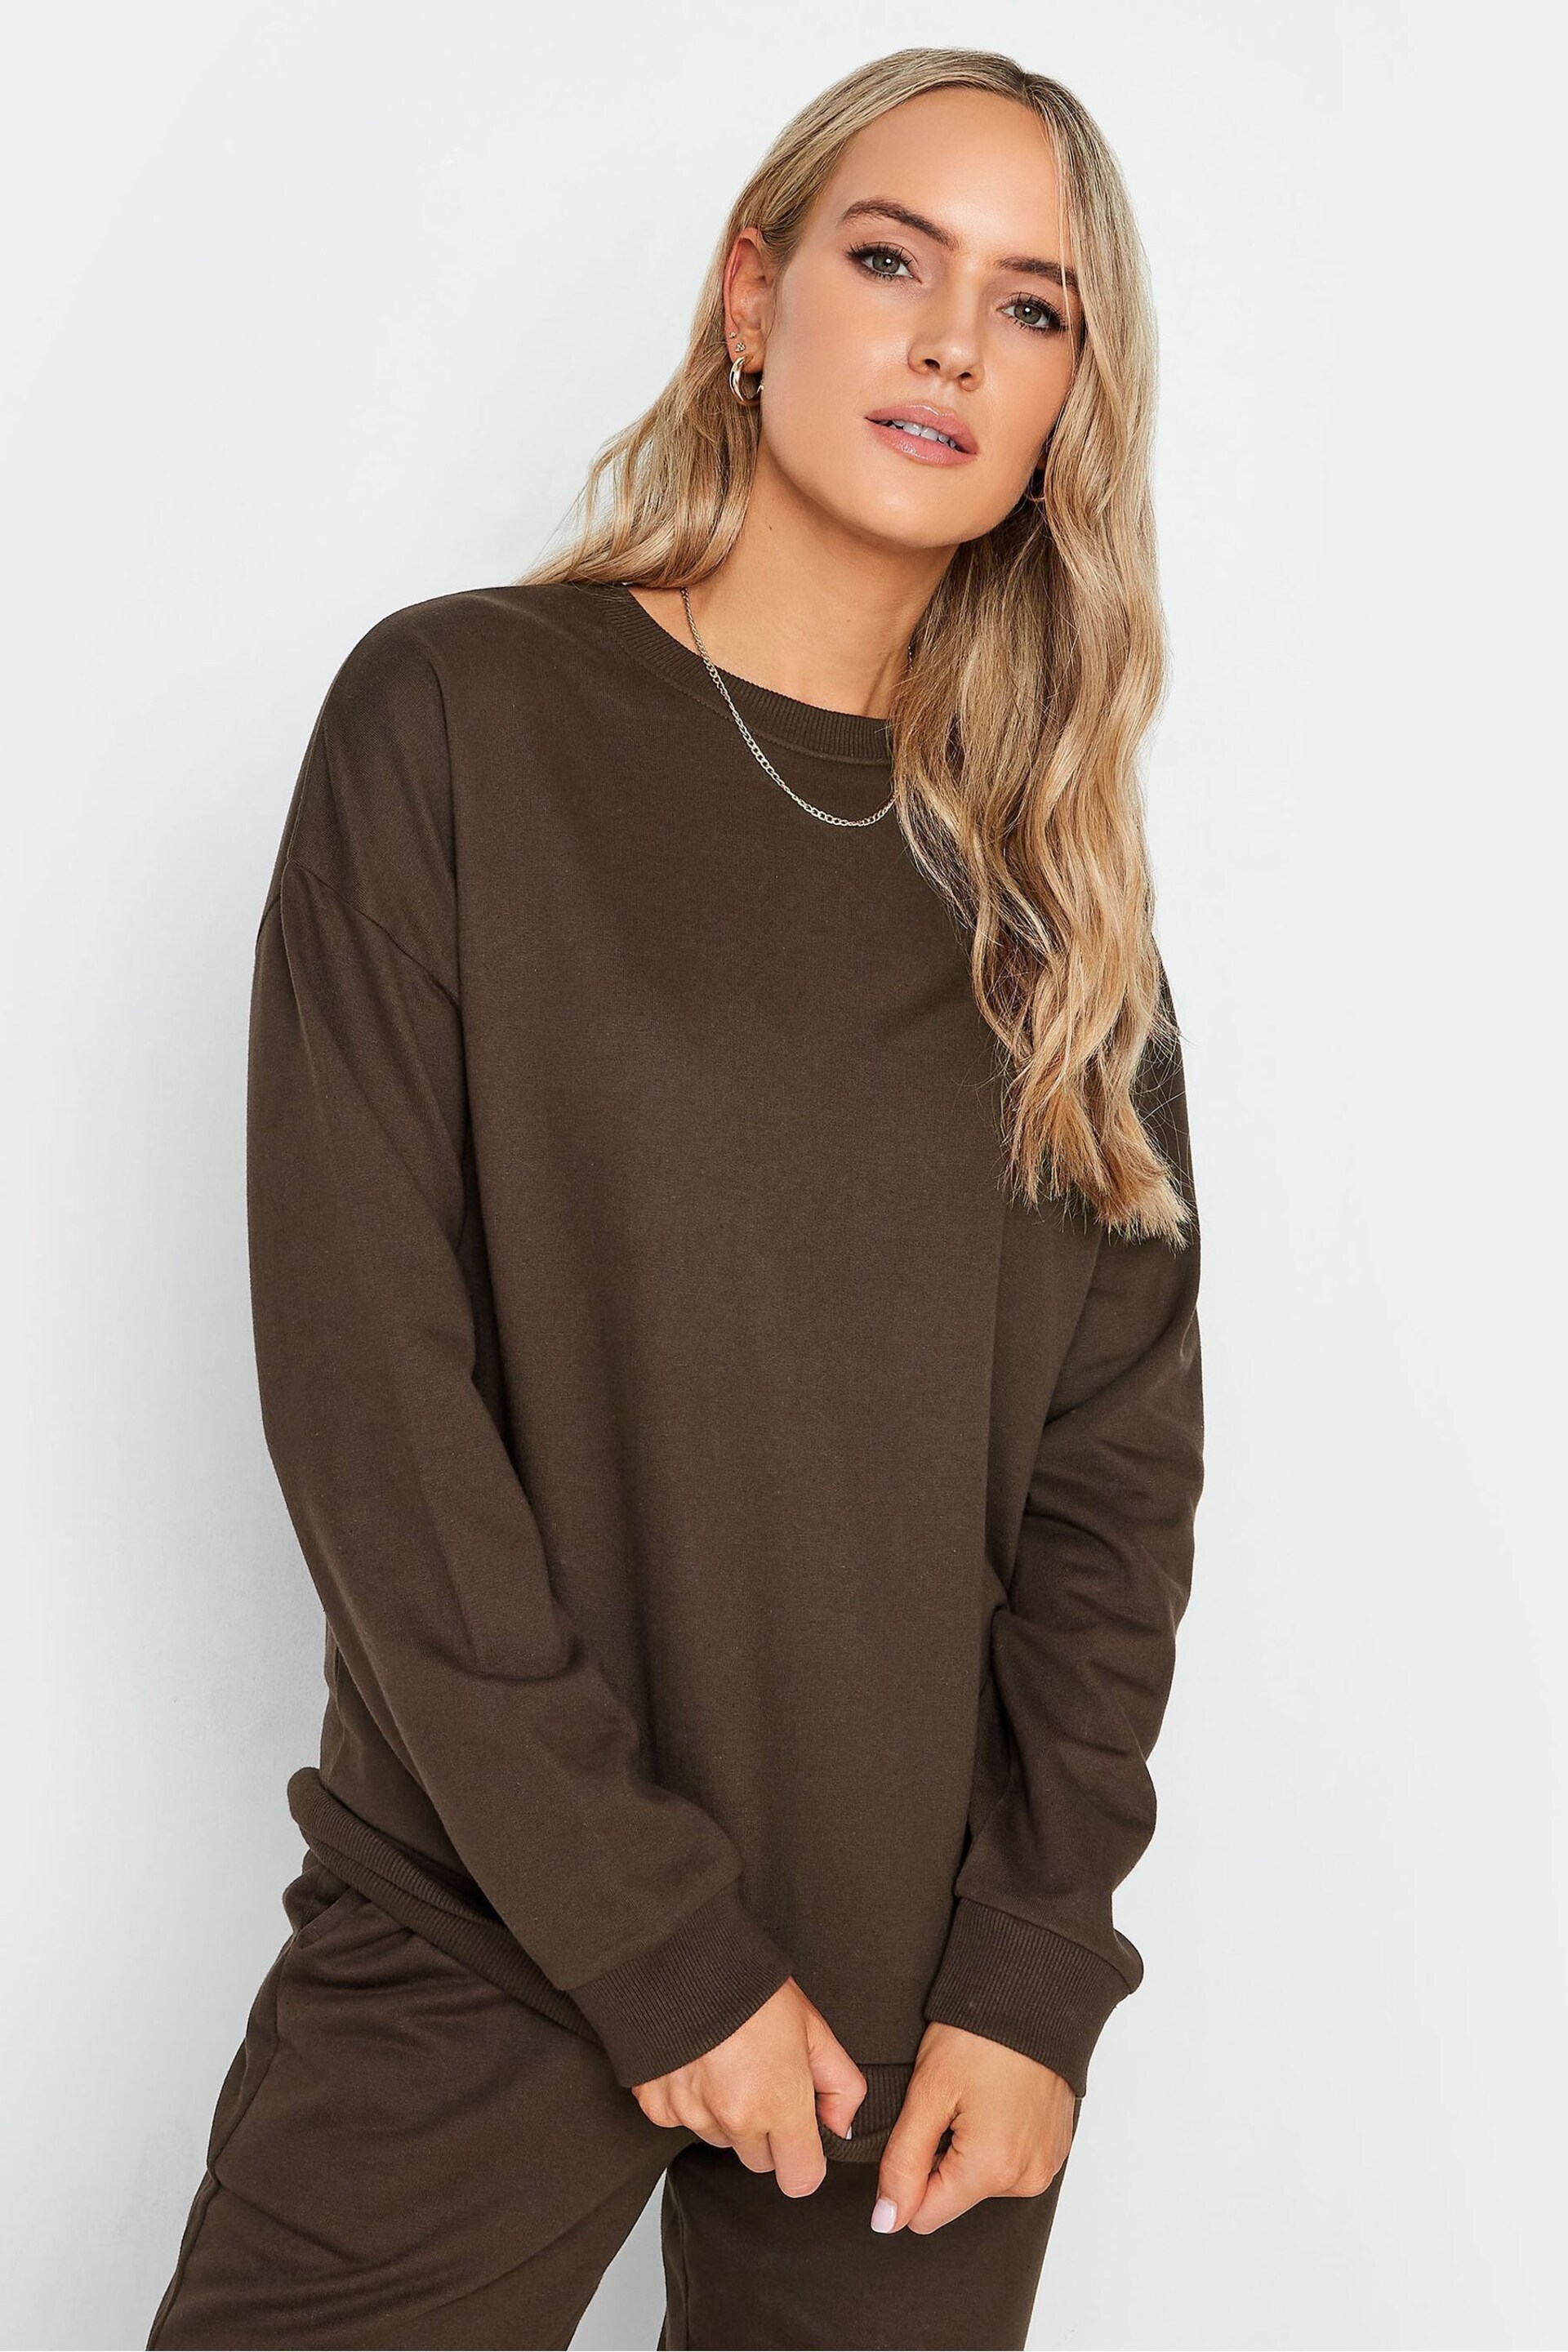 Long Tall Sally Brown Sweatshirt - Image 1 of 4